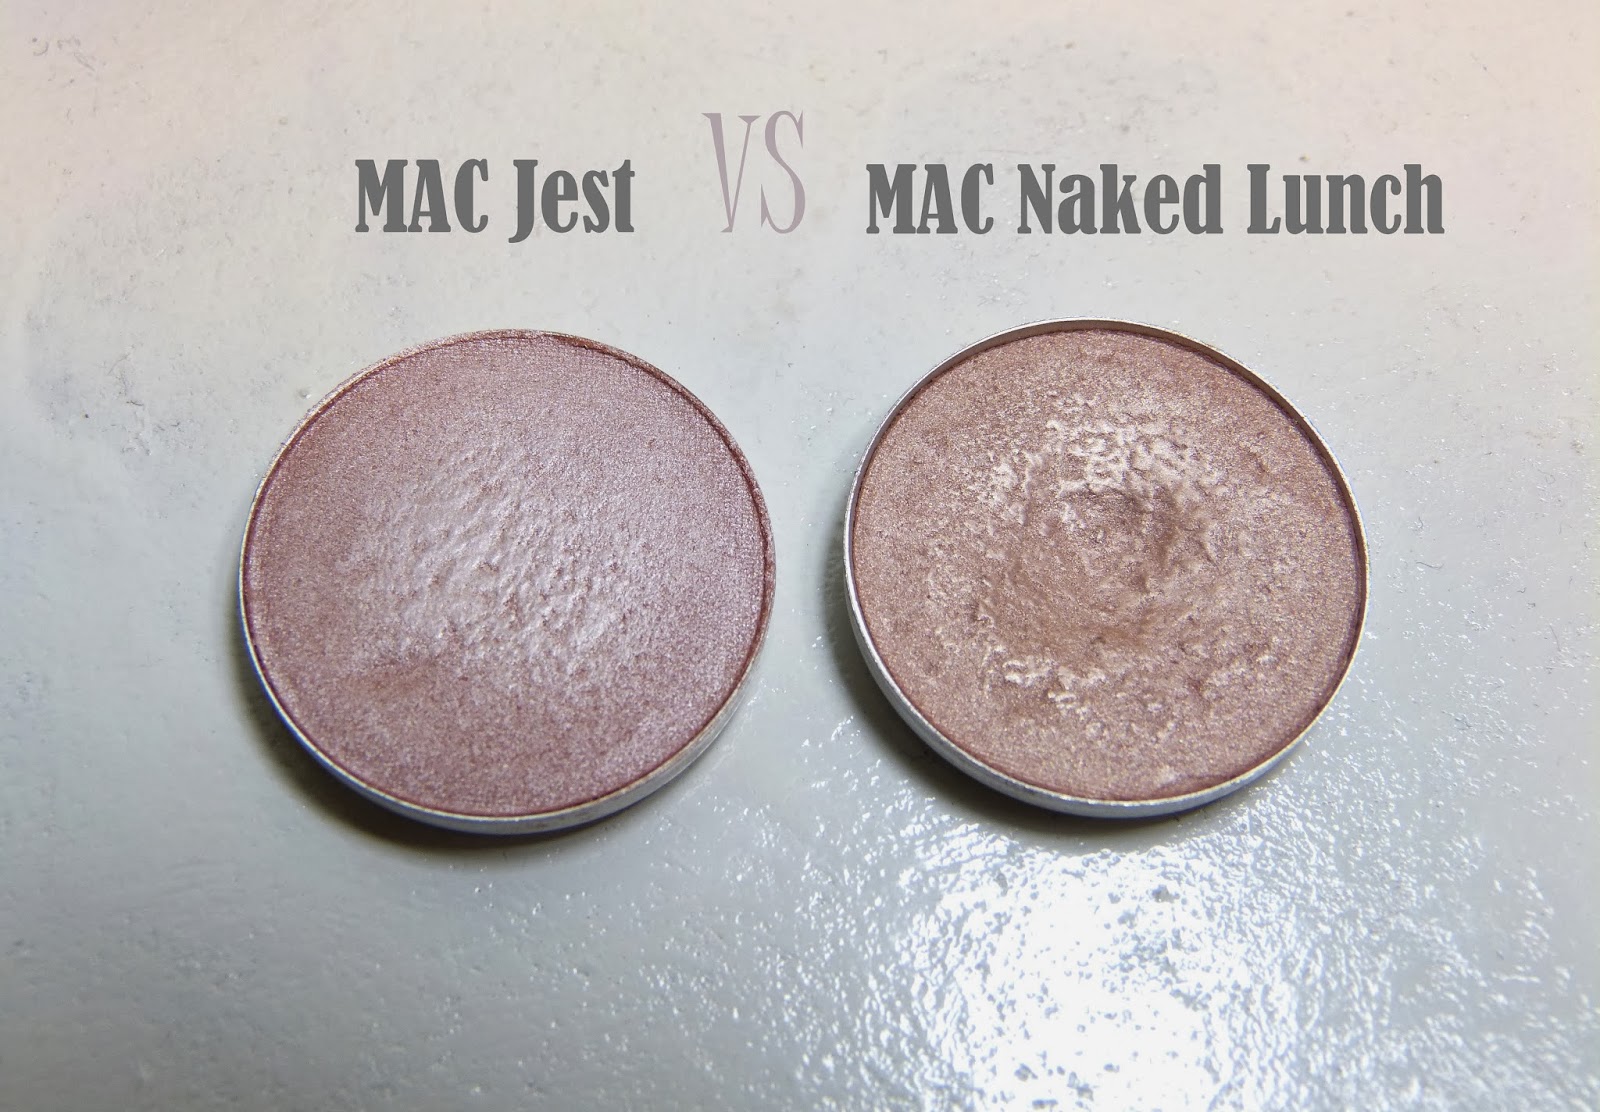 MAC Jest VS MAC Naked Lunch.